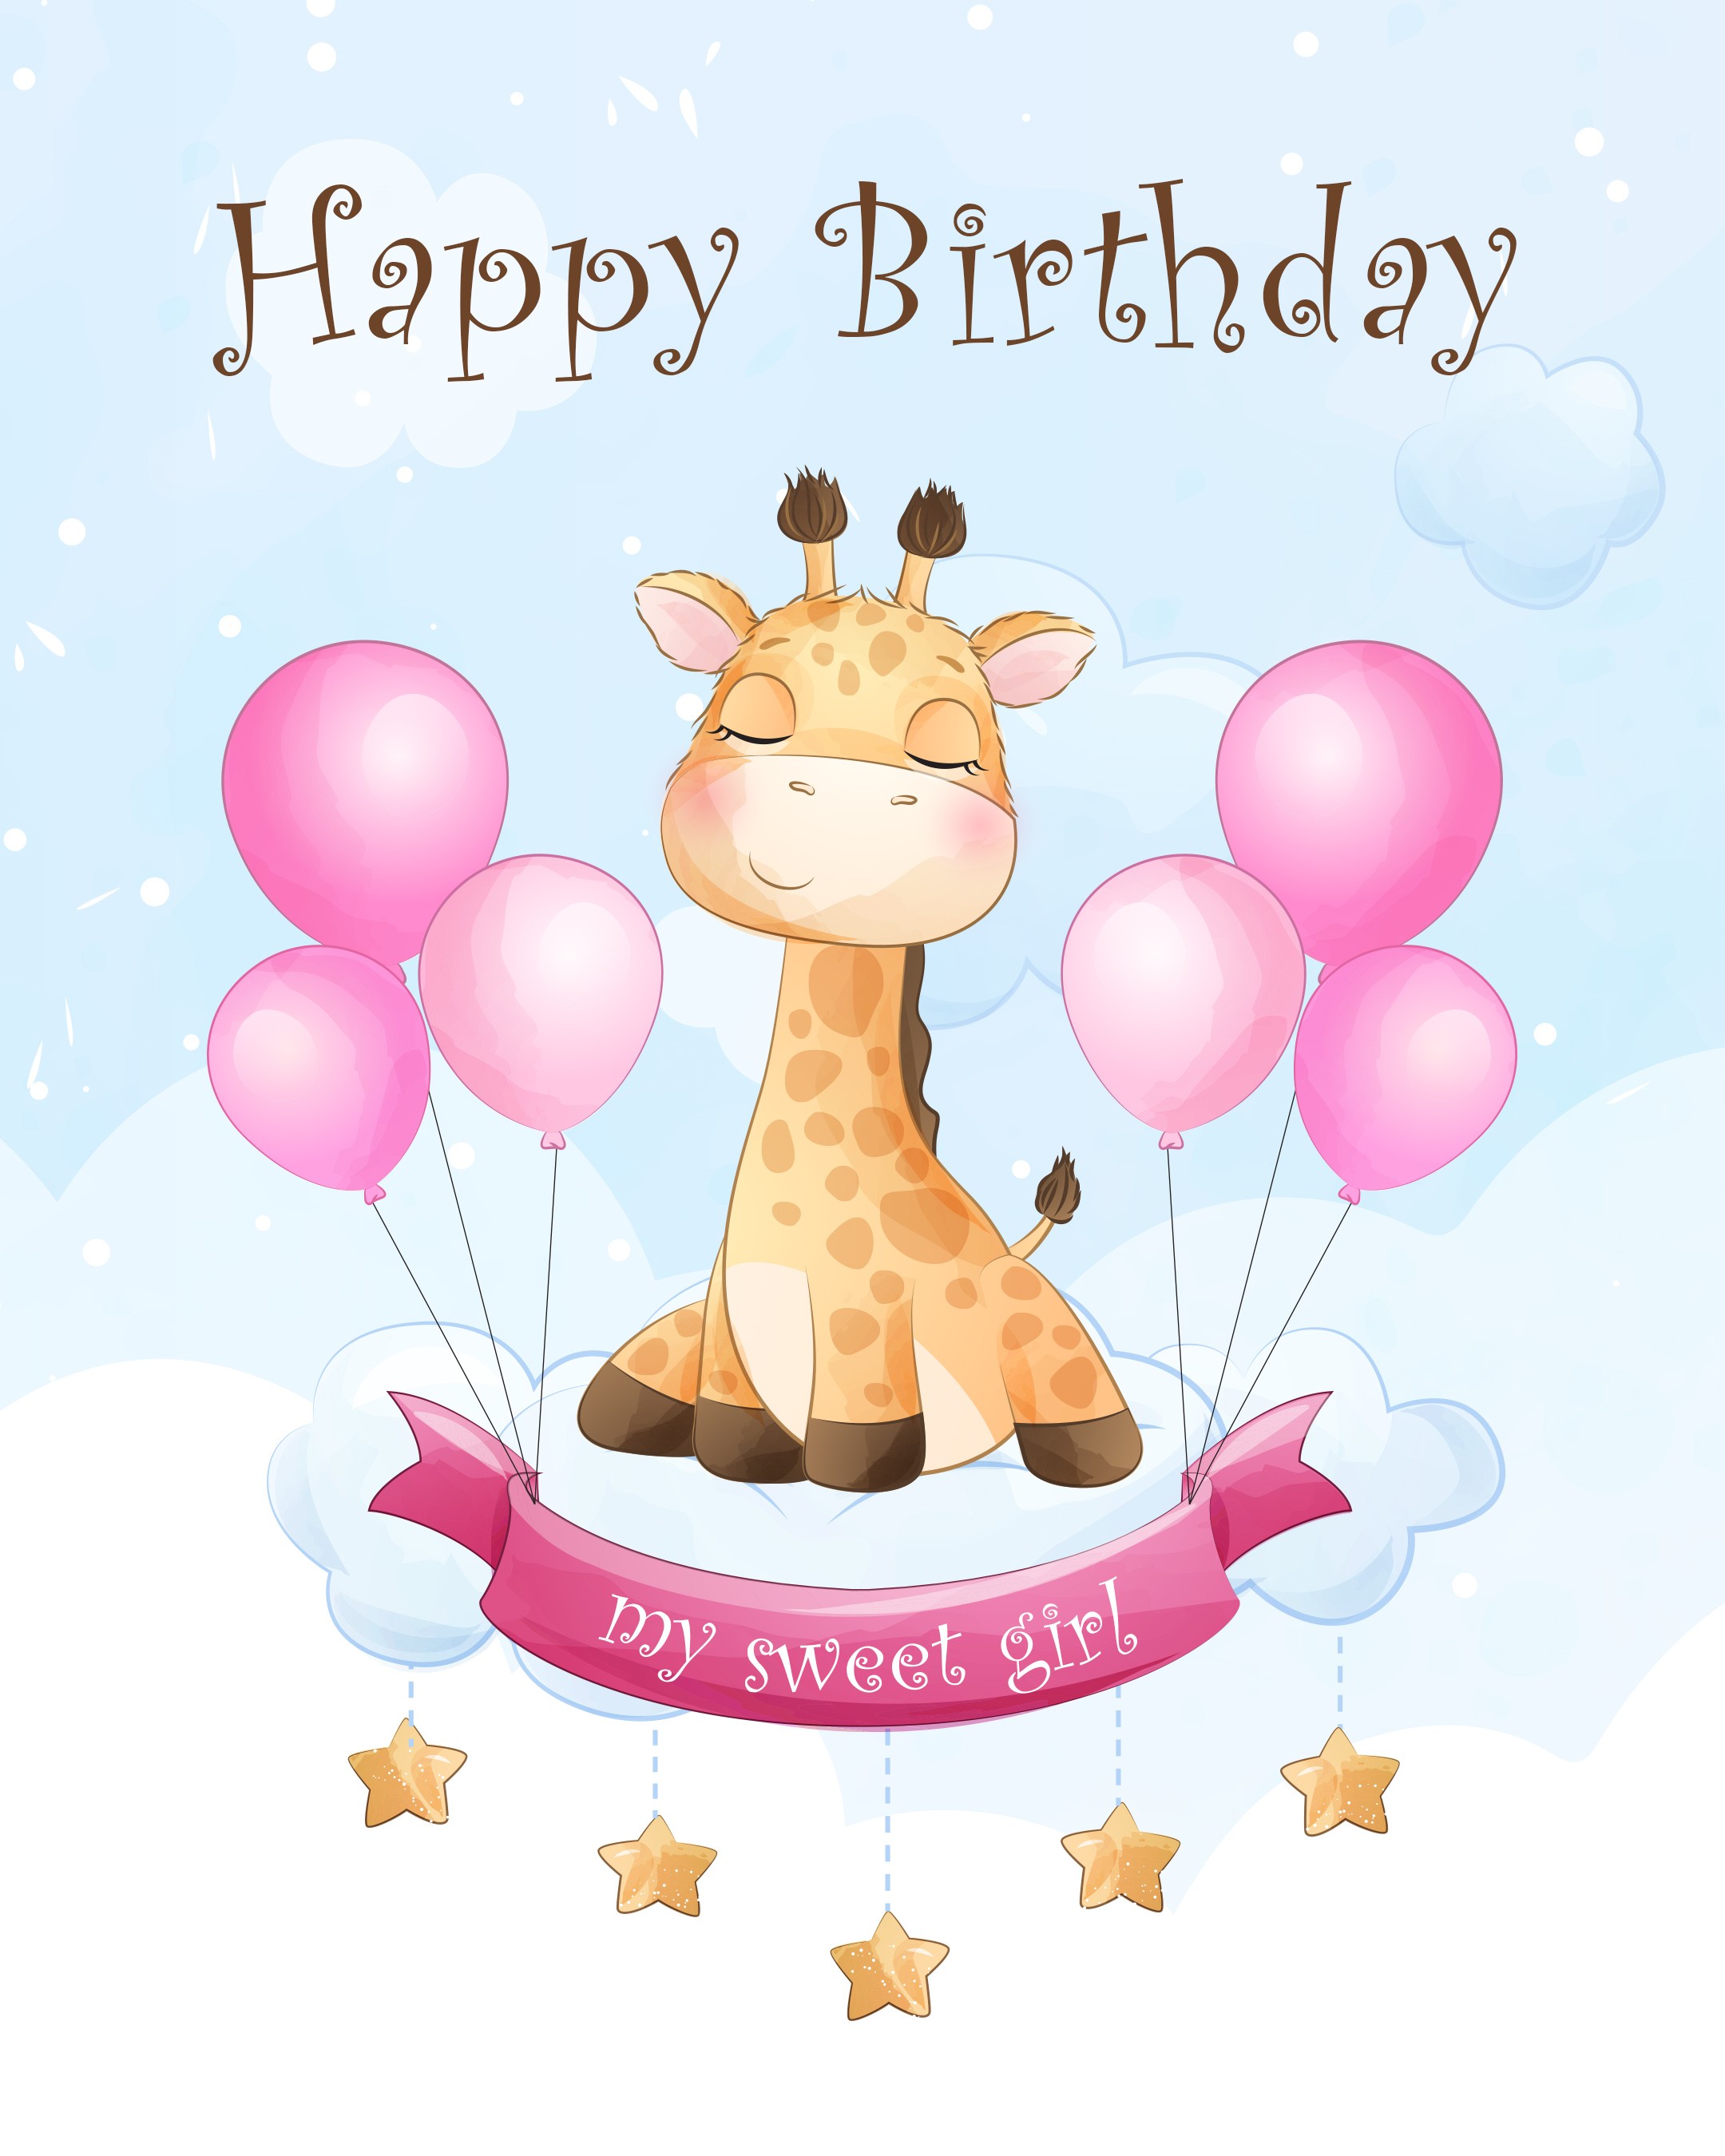 Free Happy Birthday Image For Girl With Giraffe - birthdayimg.com